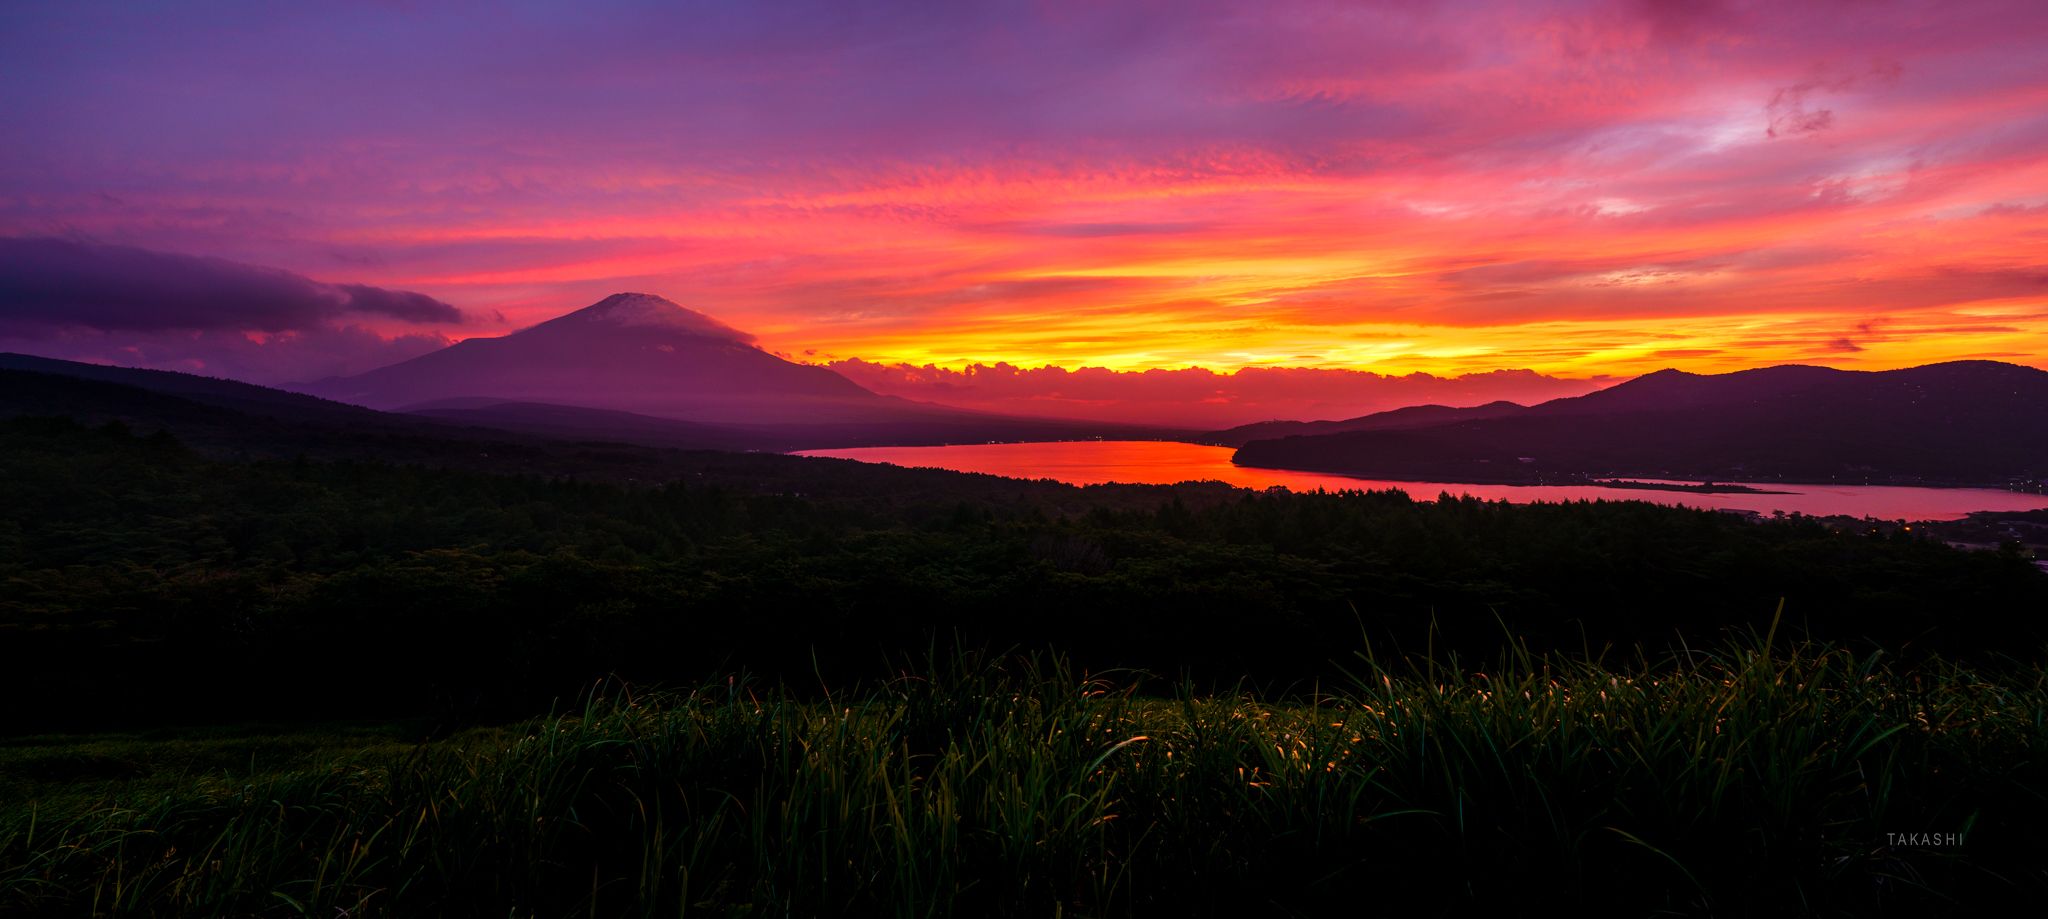 Fuji Japan mountain sunset clouds lake red amazing beautiful, Takashi